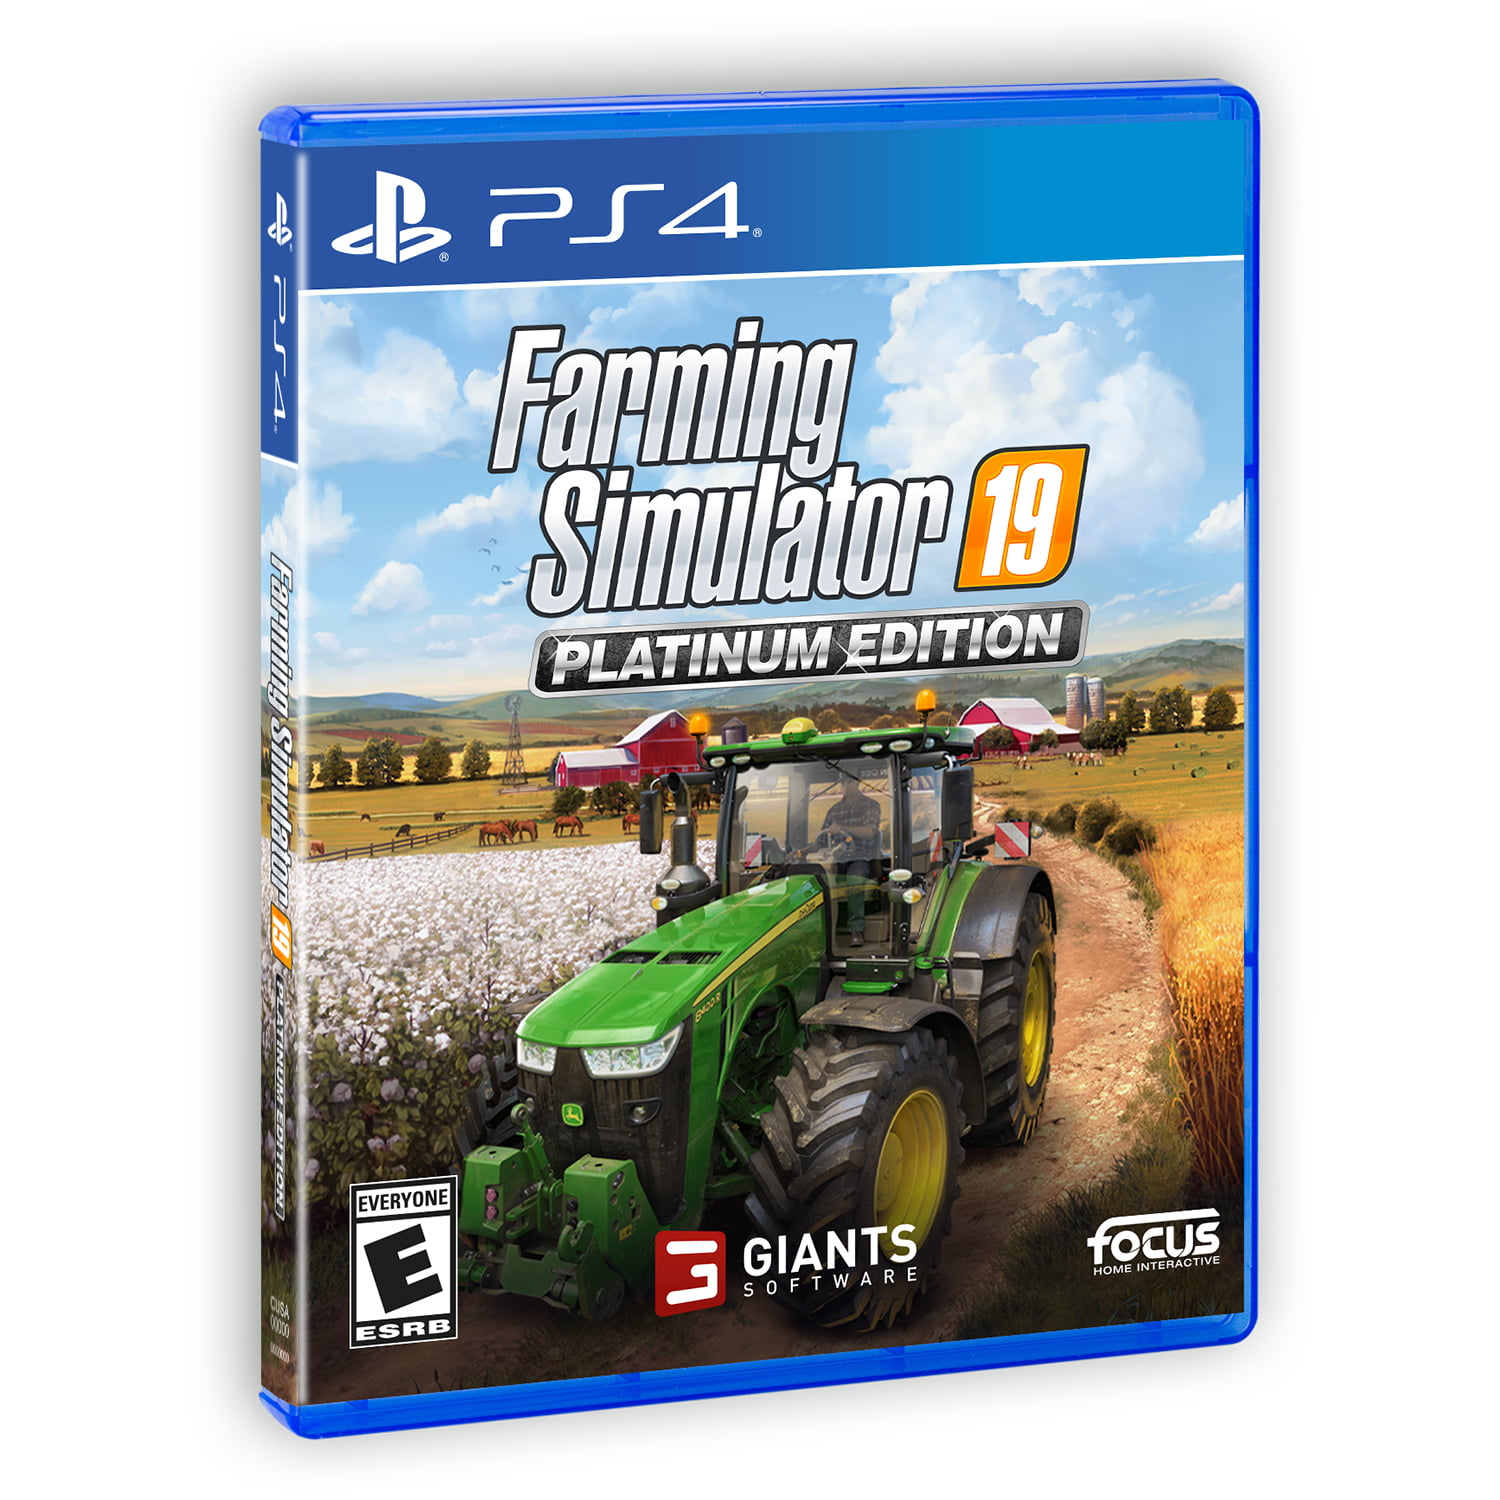  Farming Simulator 22 Platinum Edition - PlayStation 5 : Video  Games